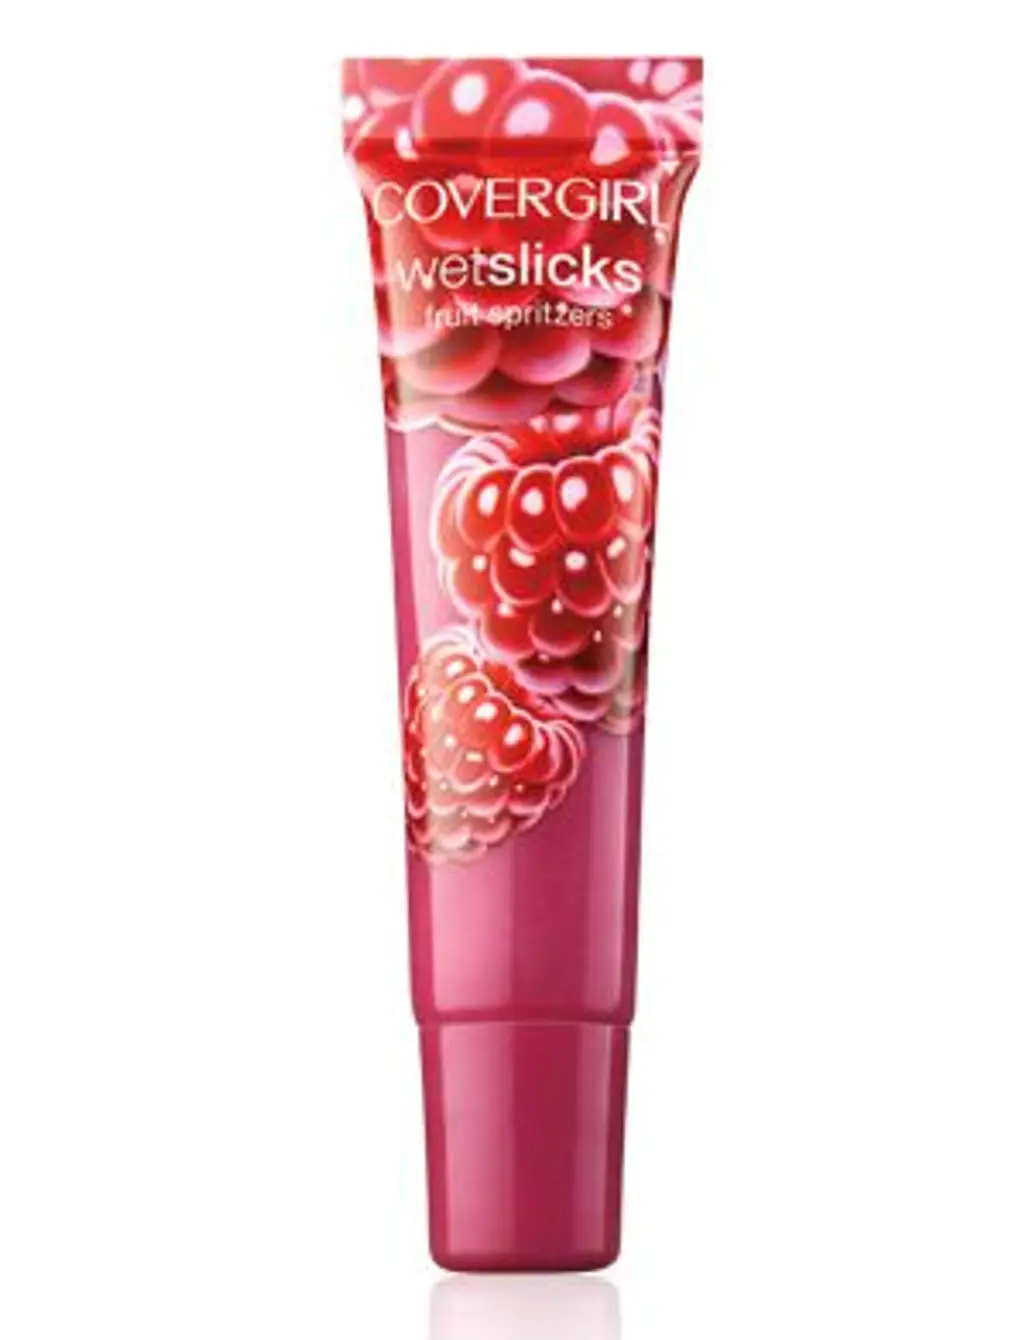 Covergirl Wetslicks Fruit Spritzers Lipgloss in Raspberry Splash